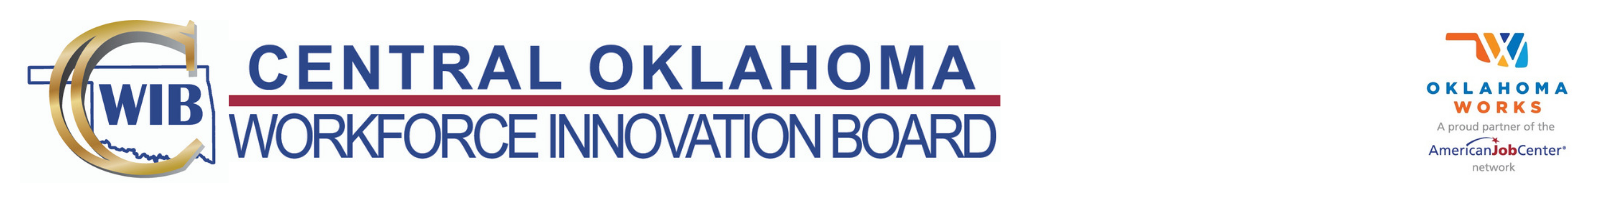 Central Oklahoma Workforce Innovation Board